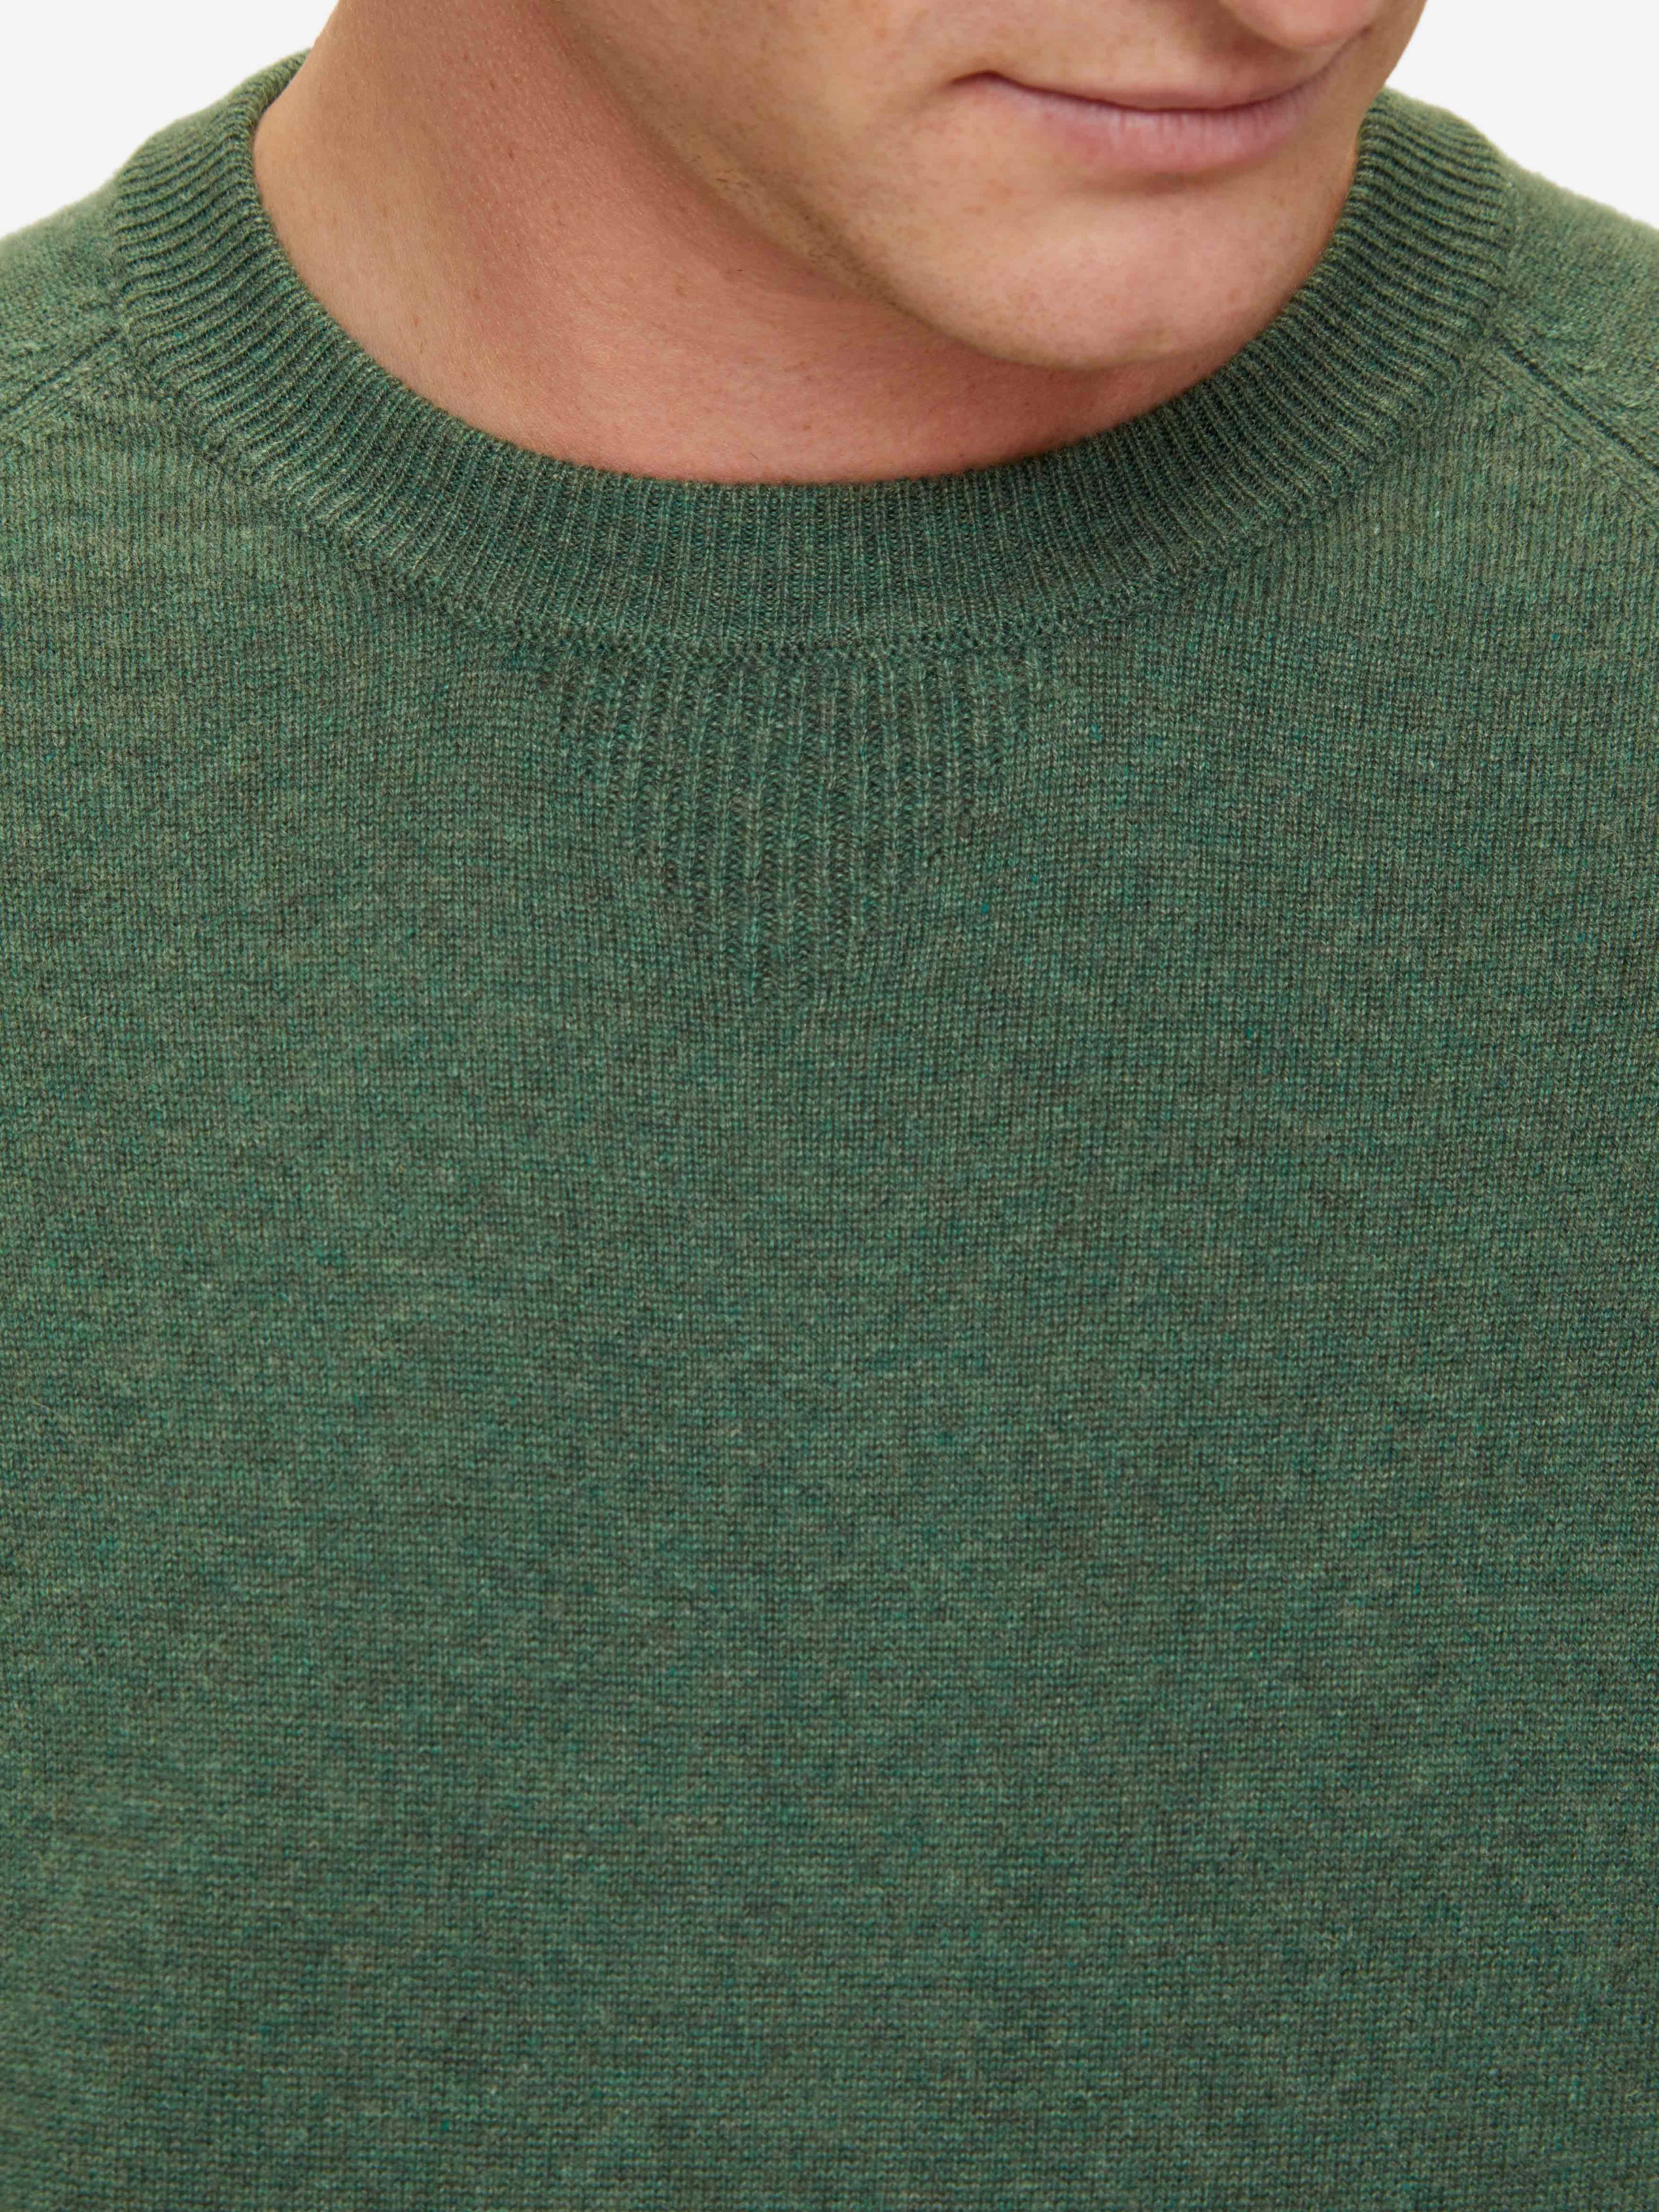 Men's Sweater Finley Cashmere Green